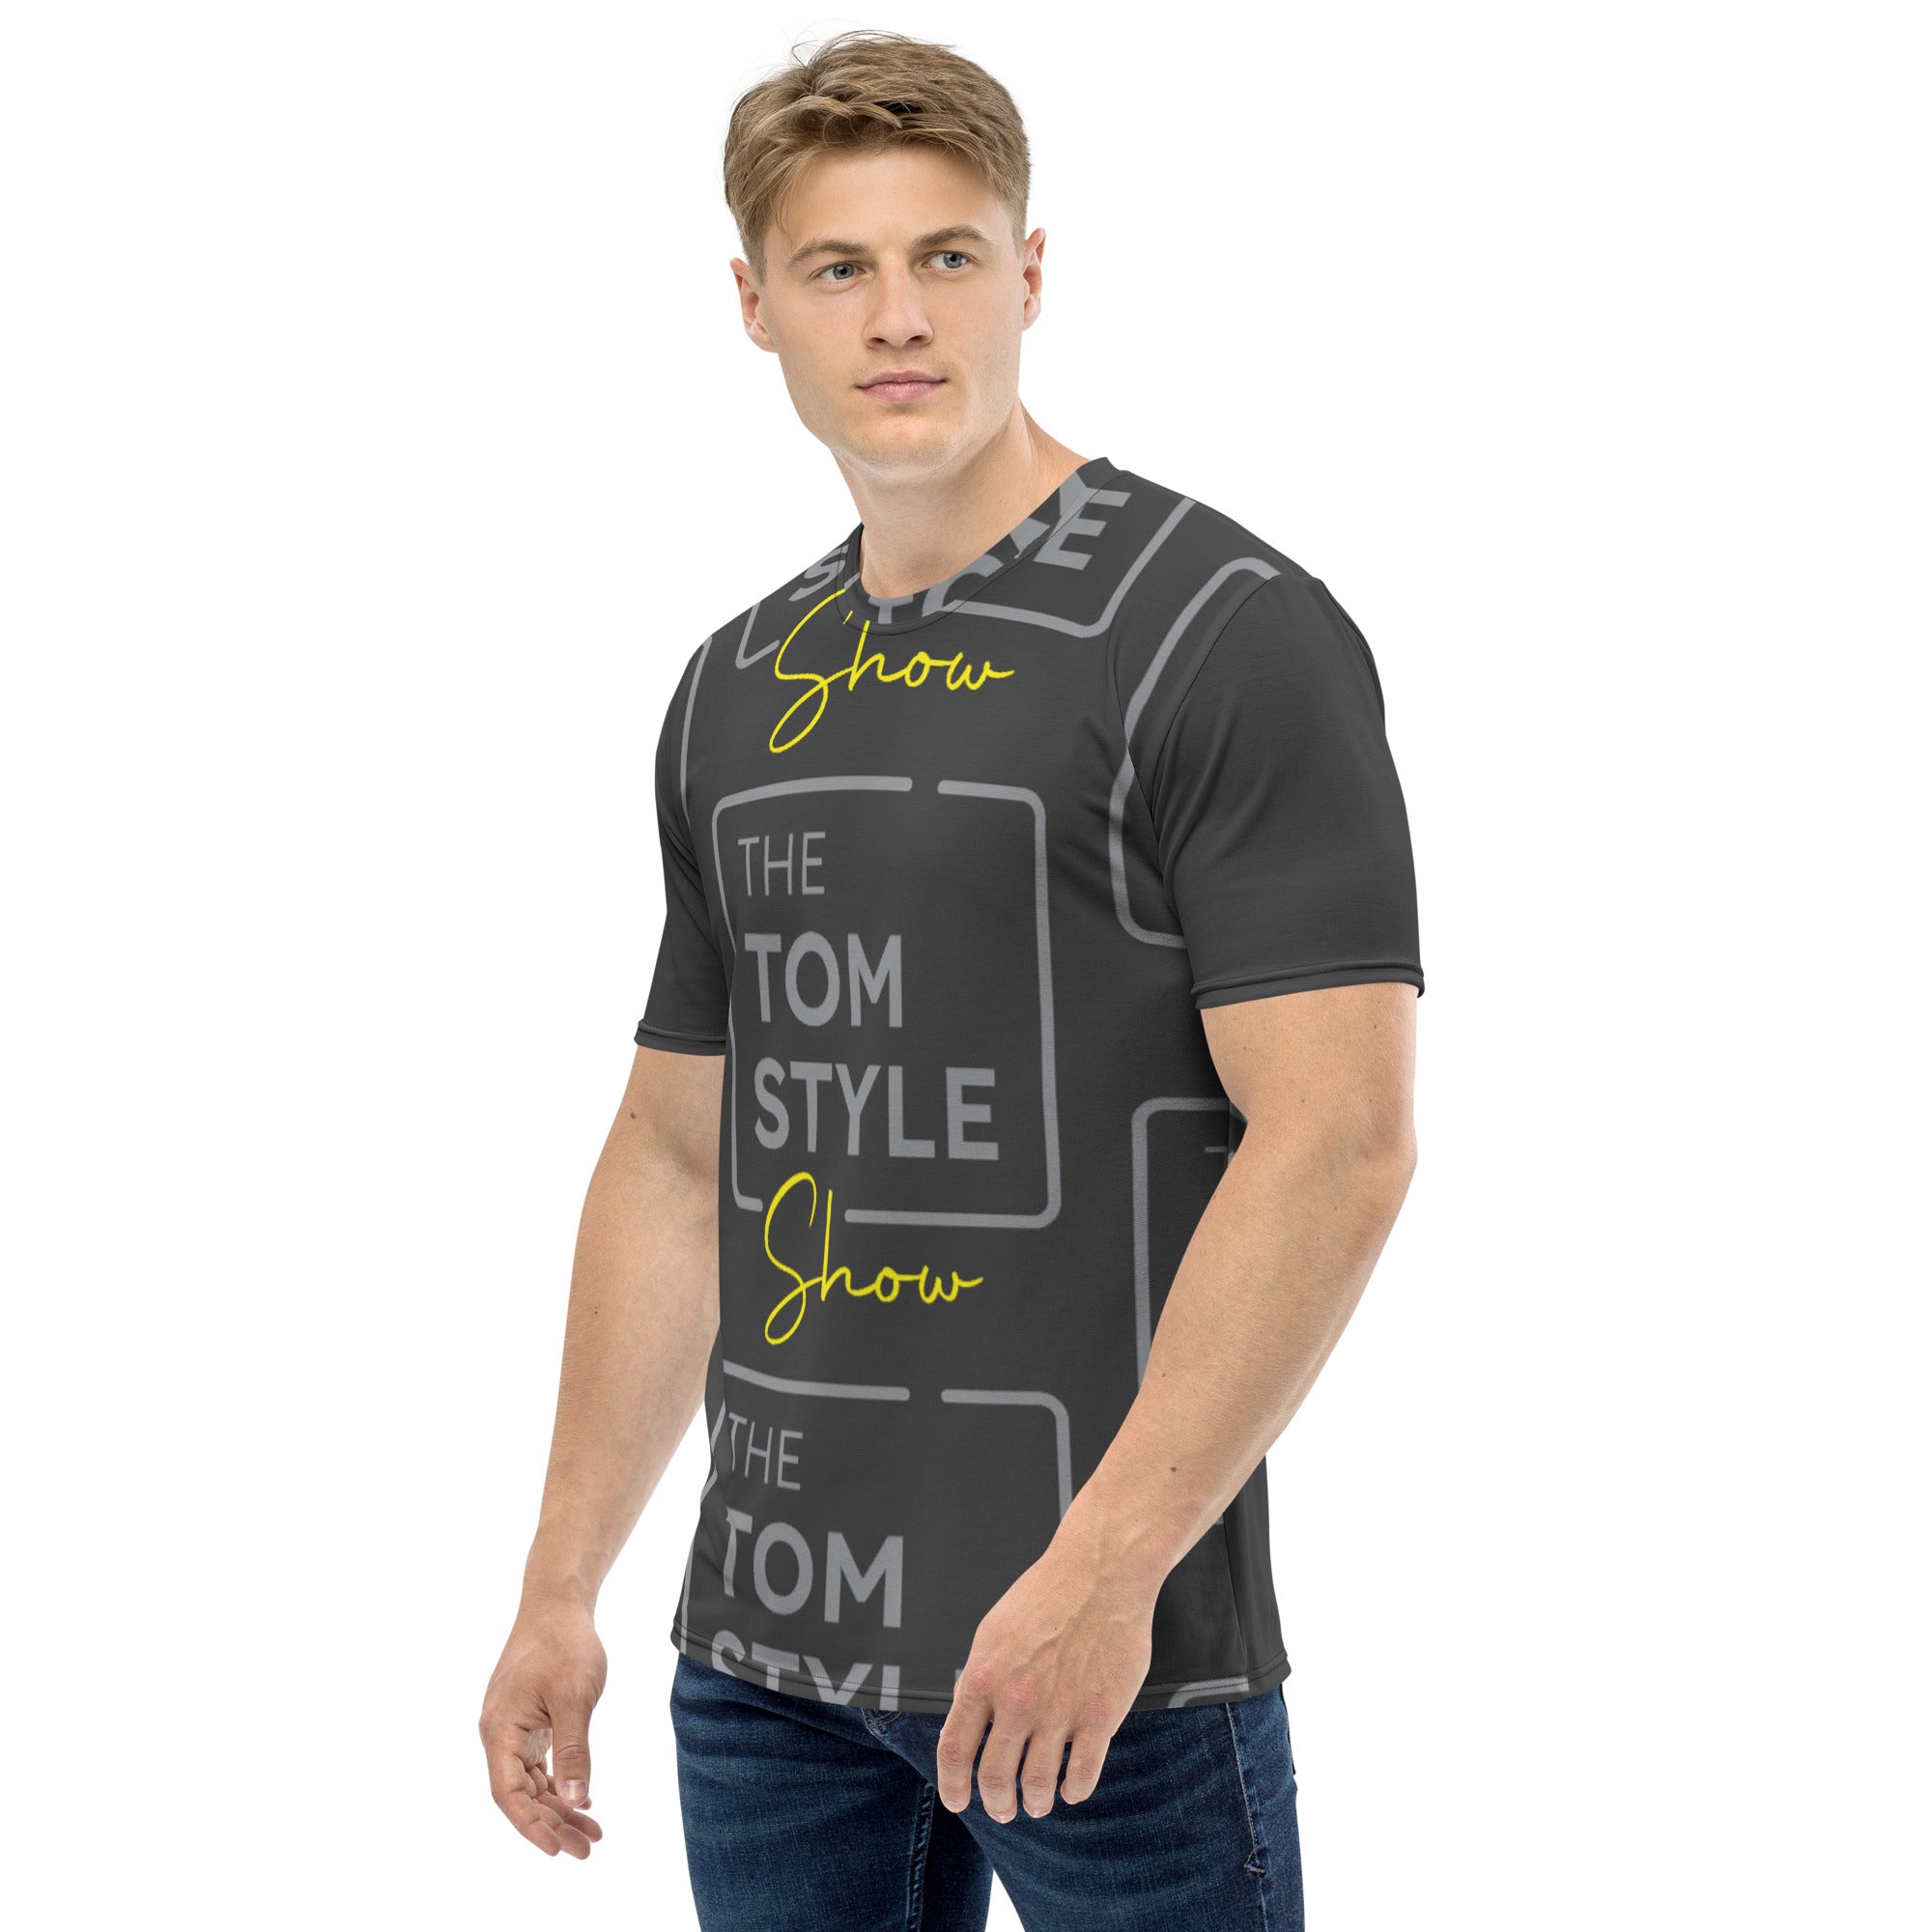 Men's T-shirt - Tom Style Show